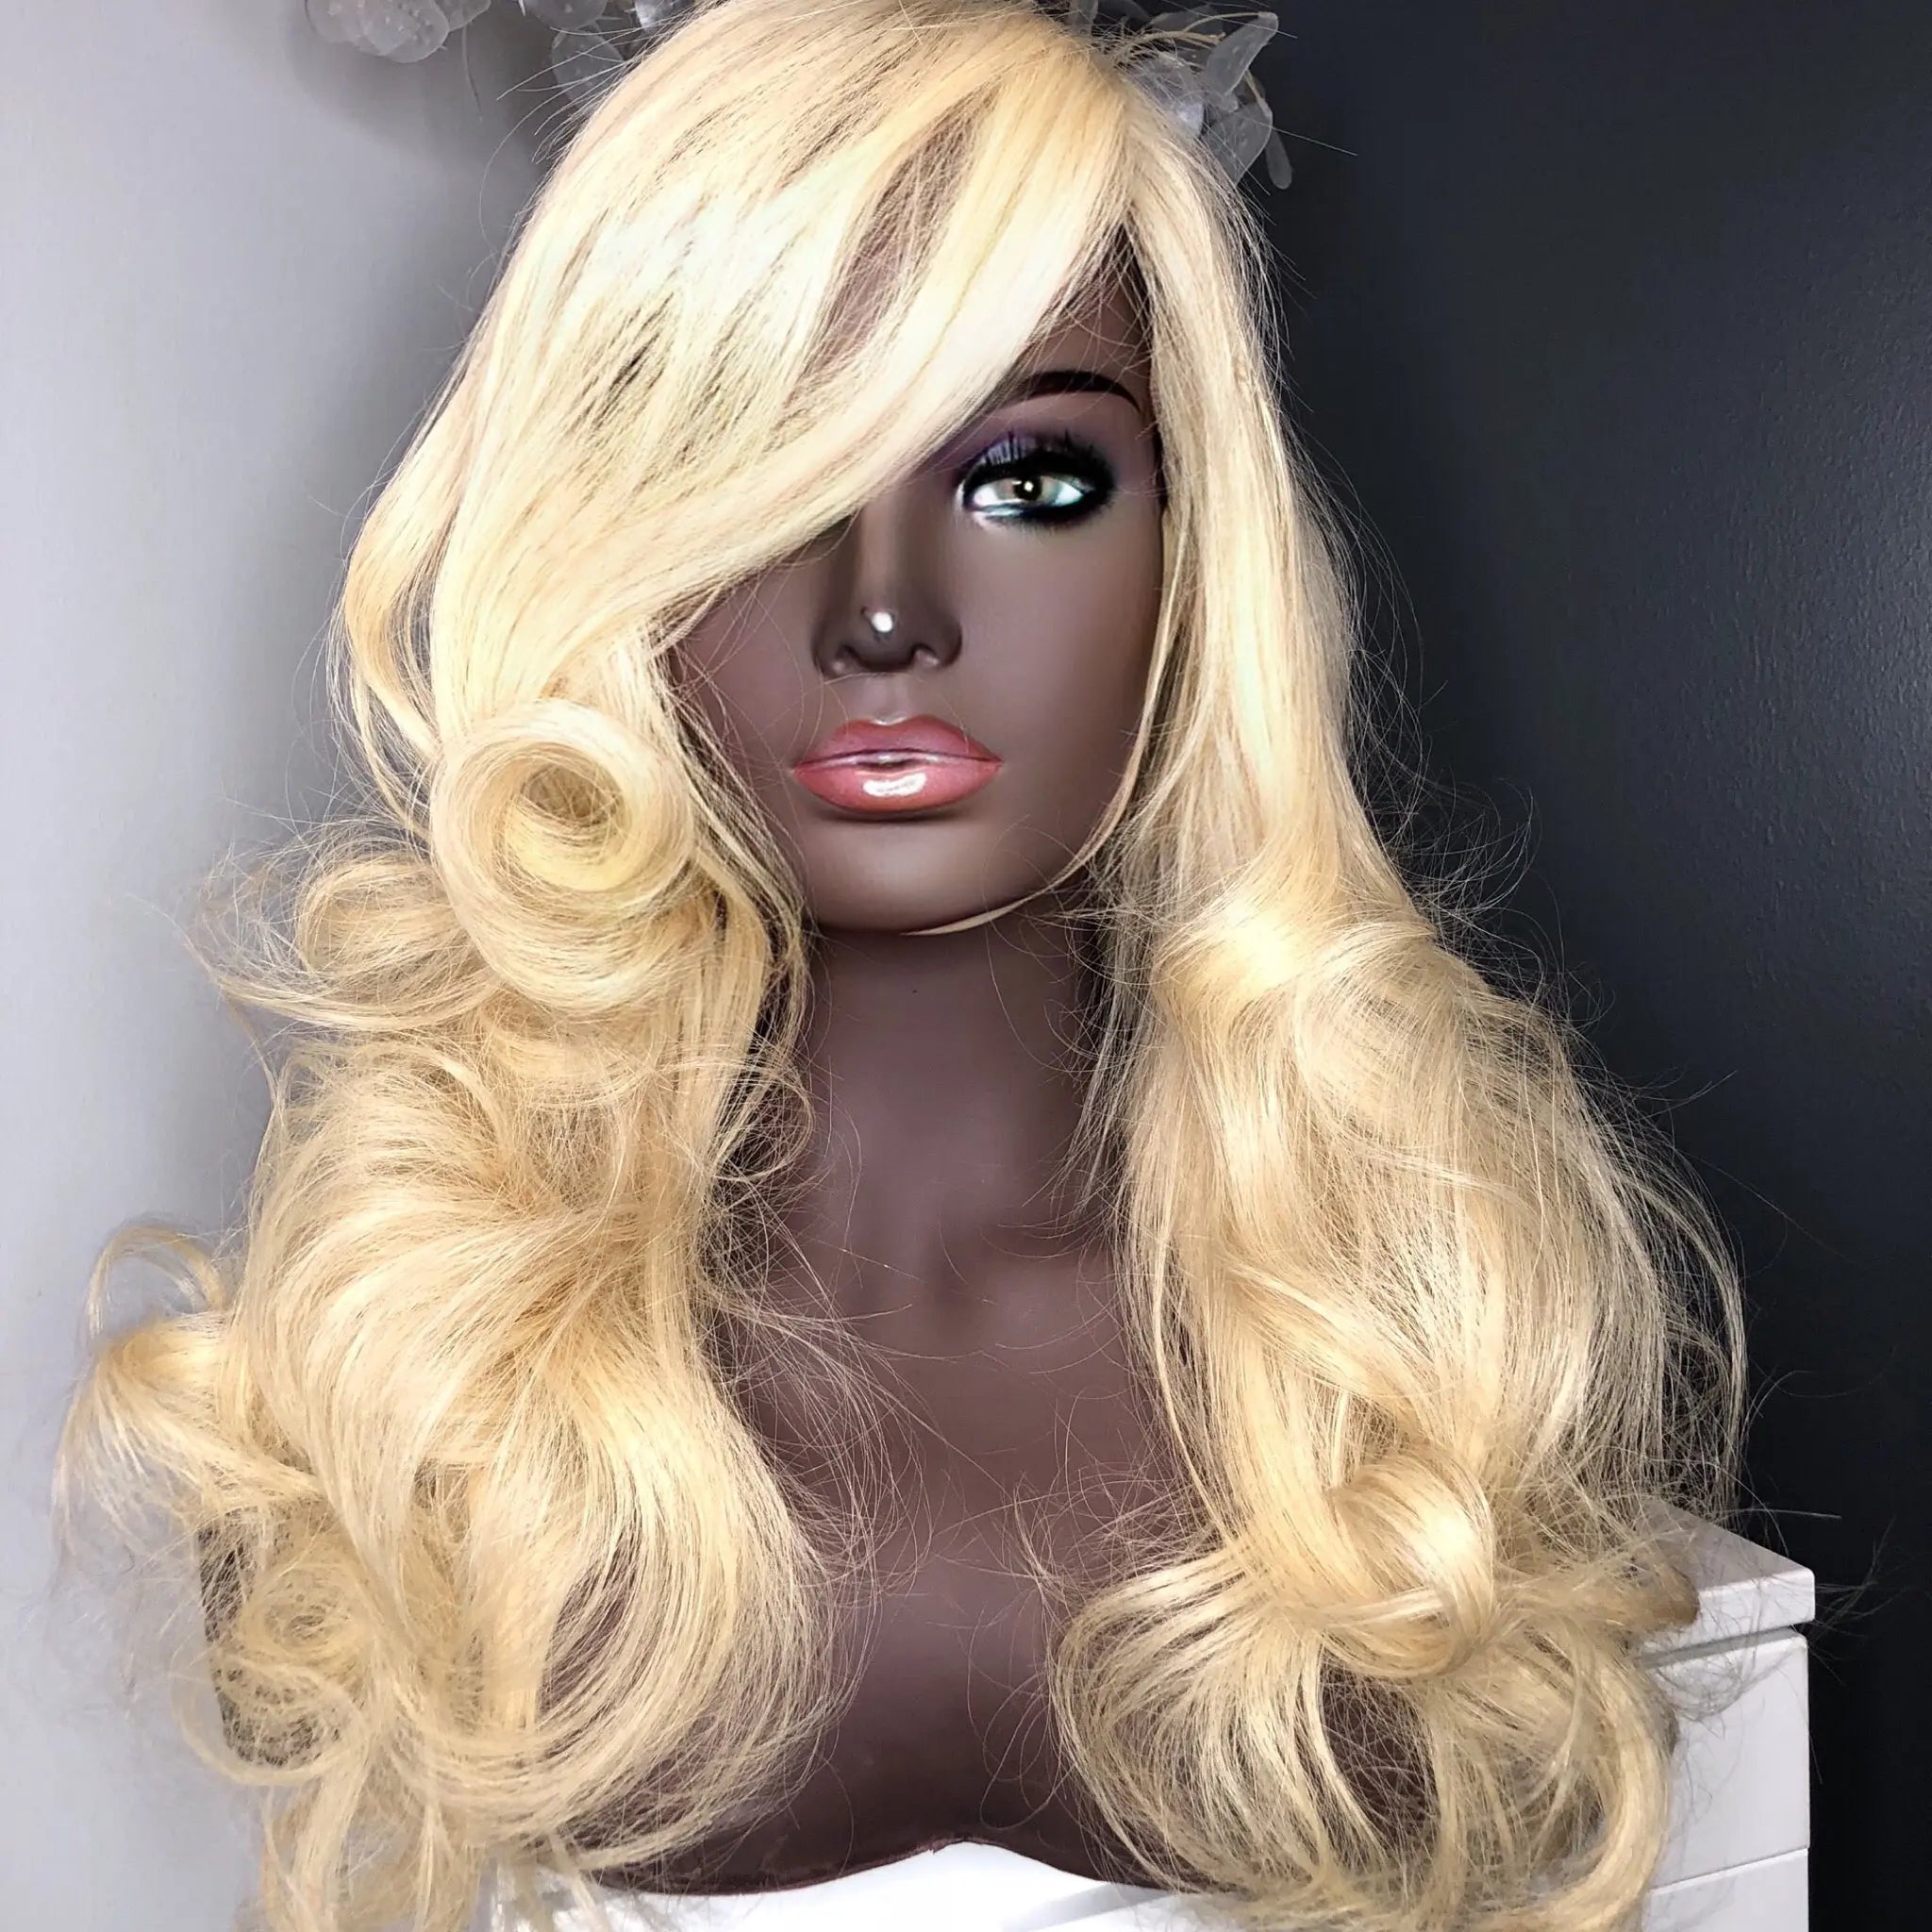 Discover Custom 100% Human Hair Wigs at La' Wig, Your Dallas Wig Destination. Find the Perfect Style at the Premier Wig Salon Near You in Dallas